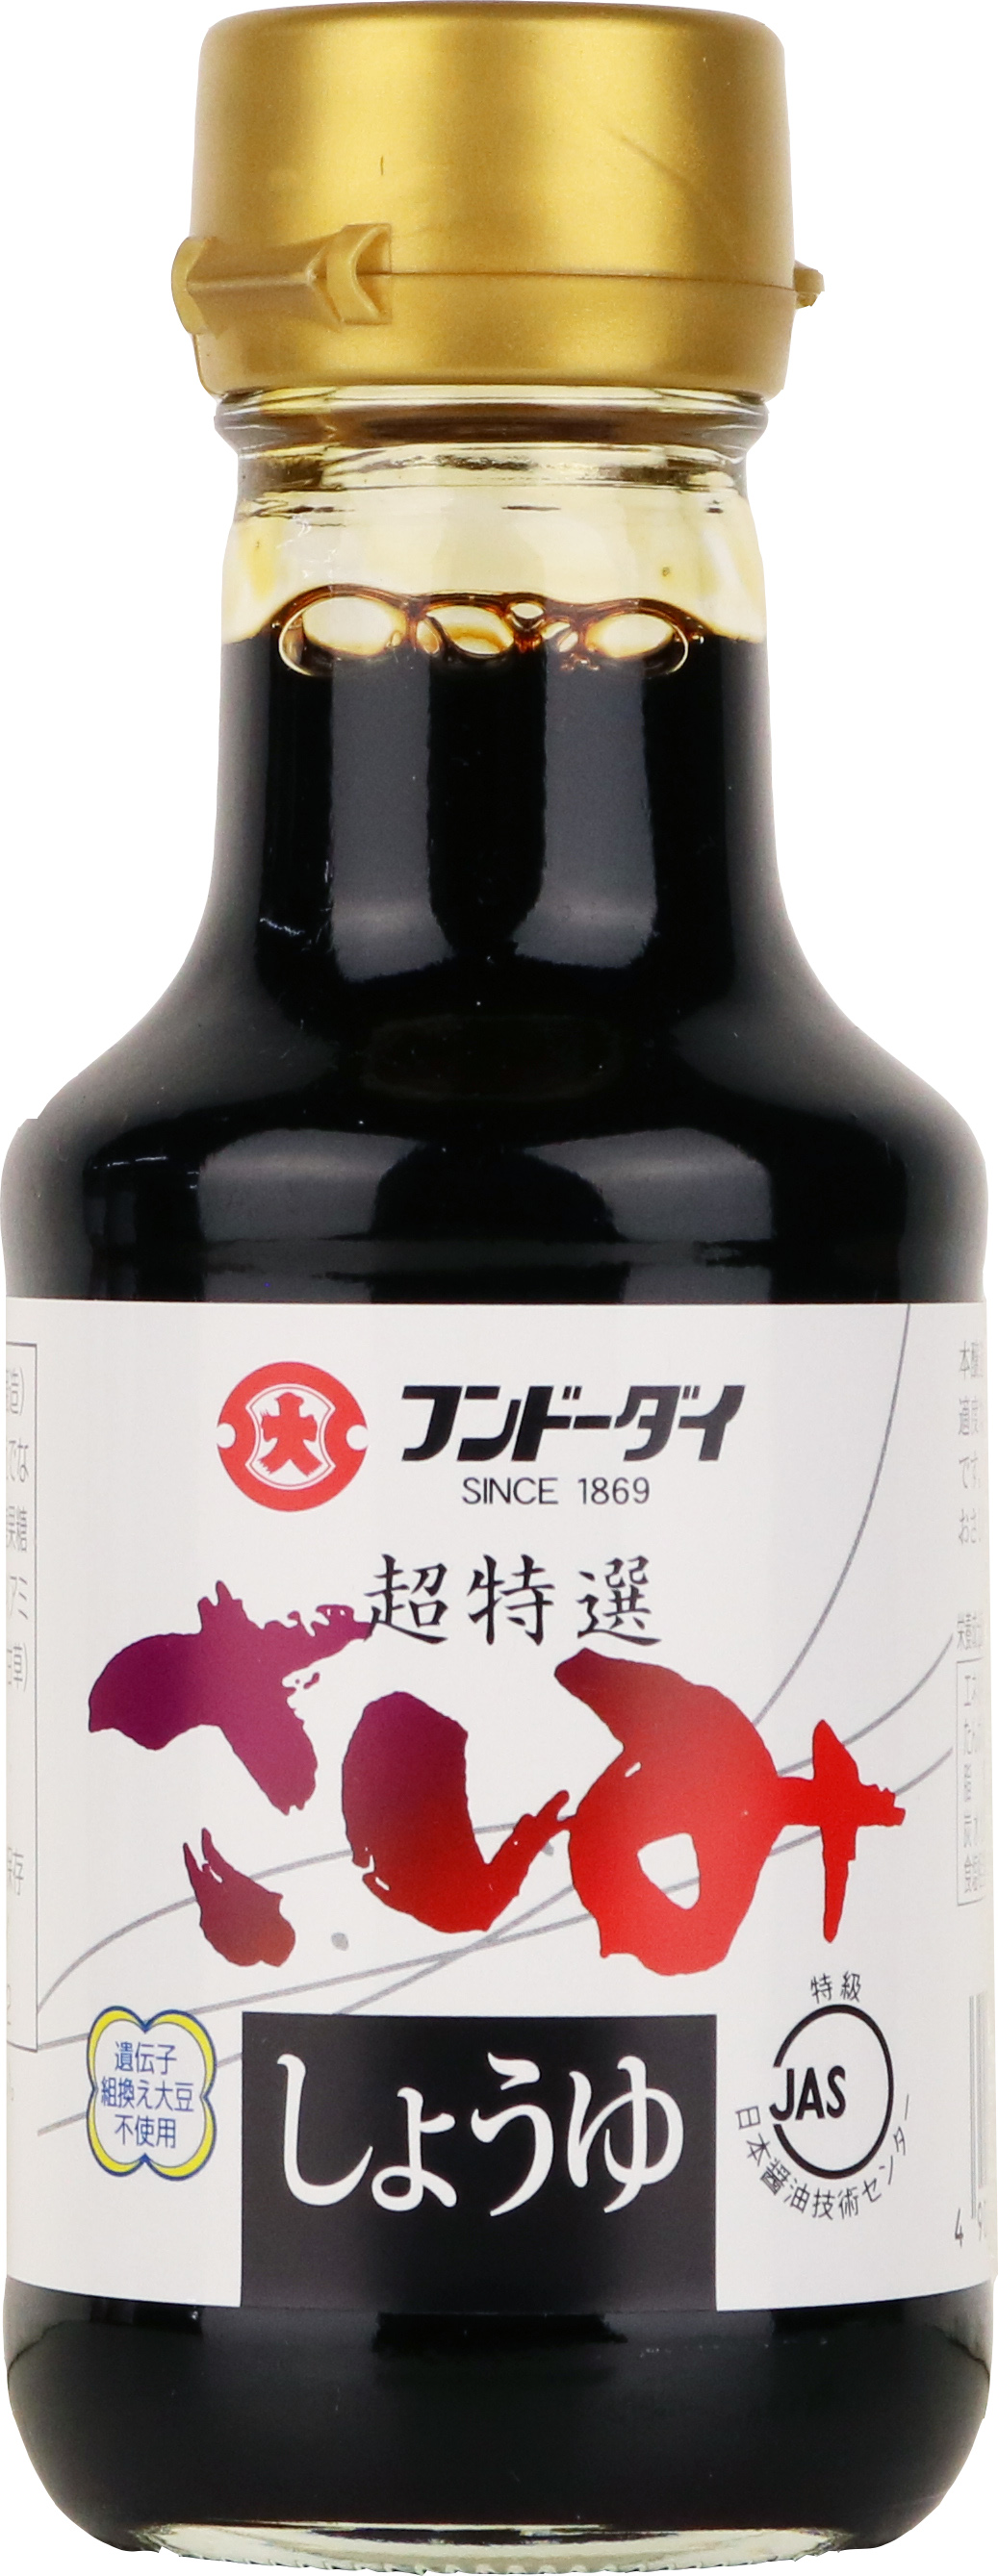 Super Special Sashimi Soy Sauce 150ml Bottle